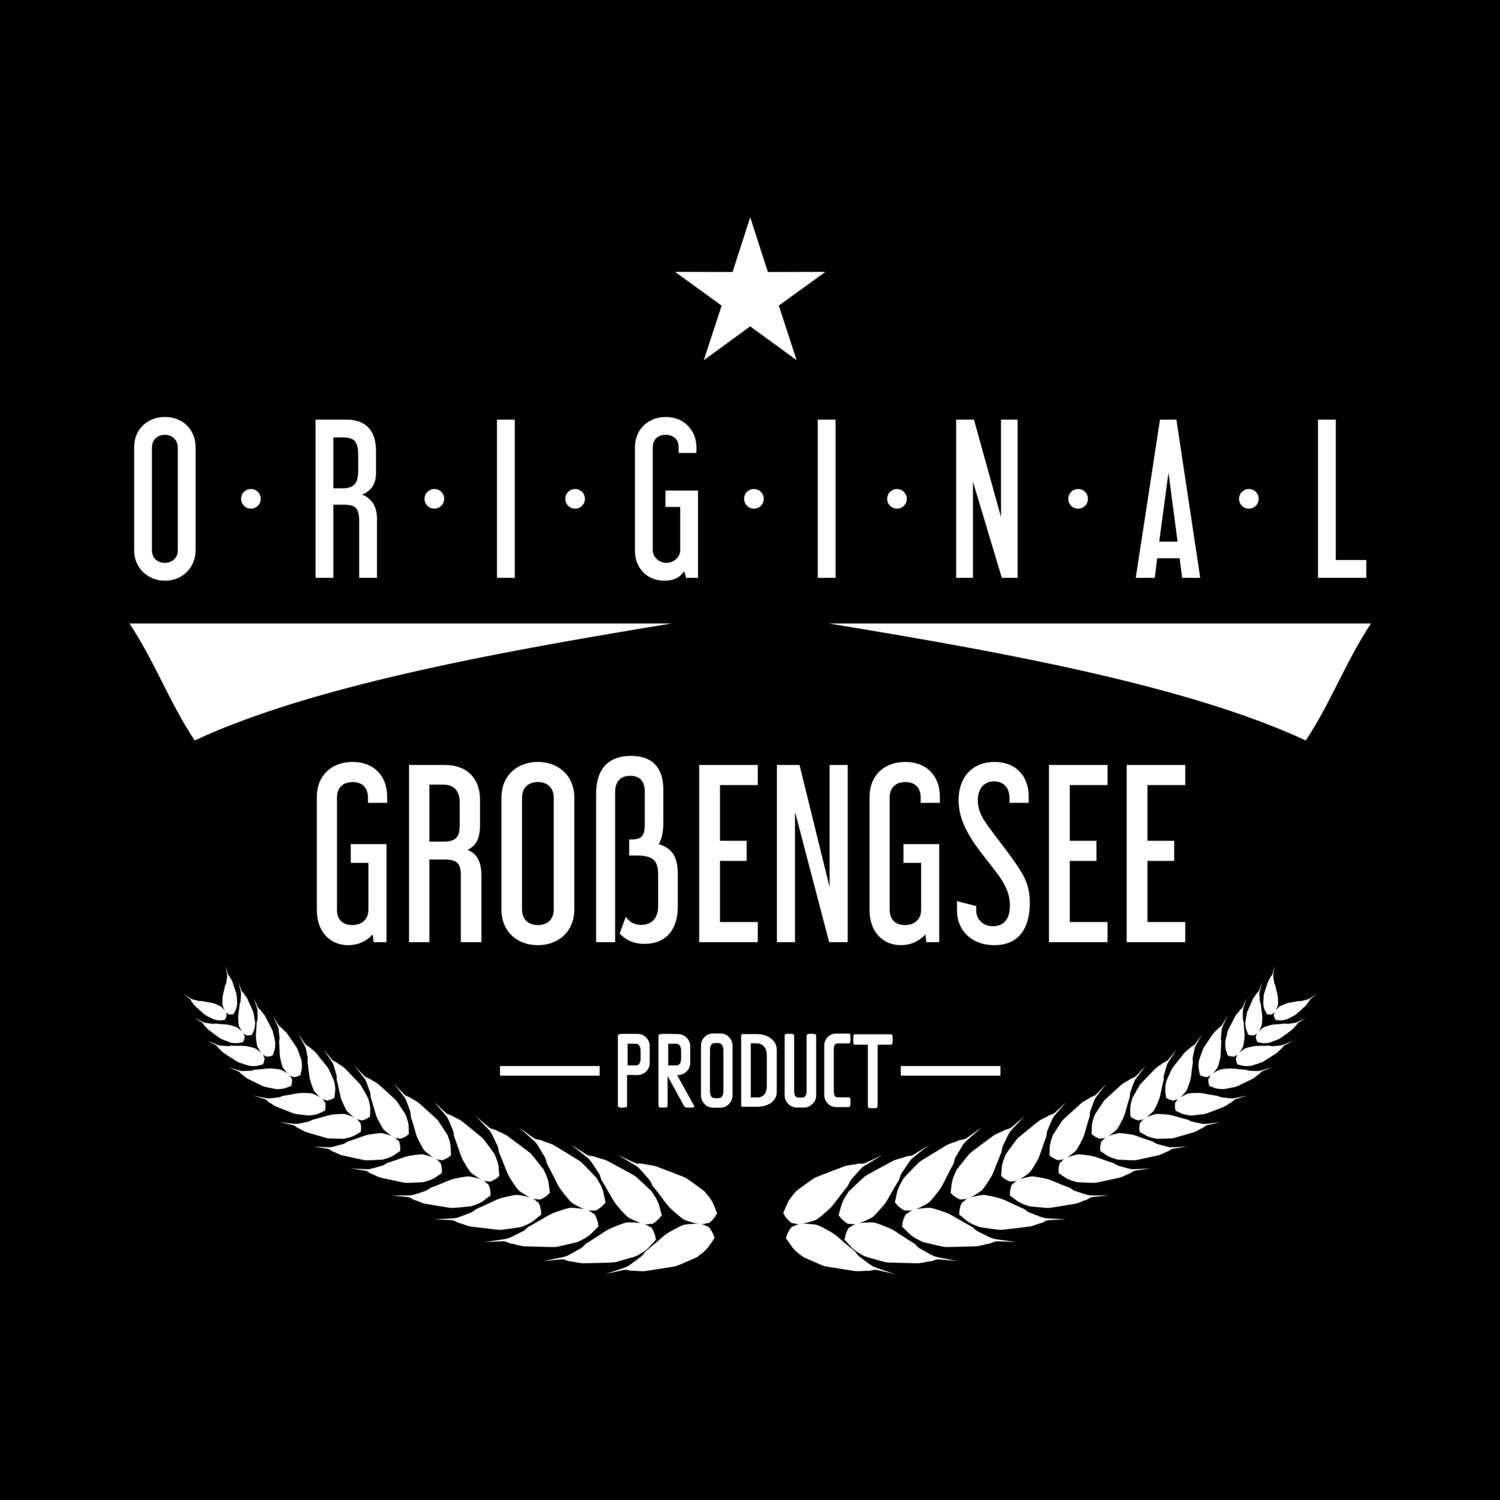 Großengsee T-Shirt »Original Product«